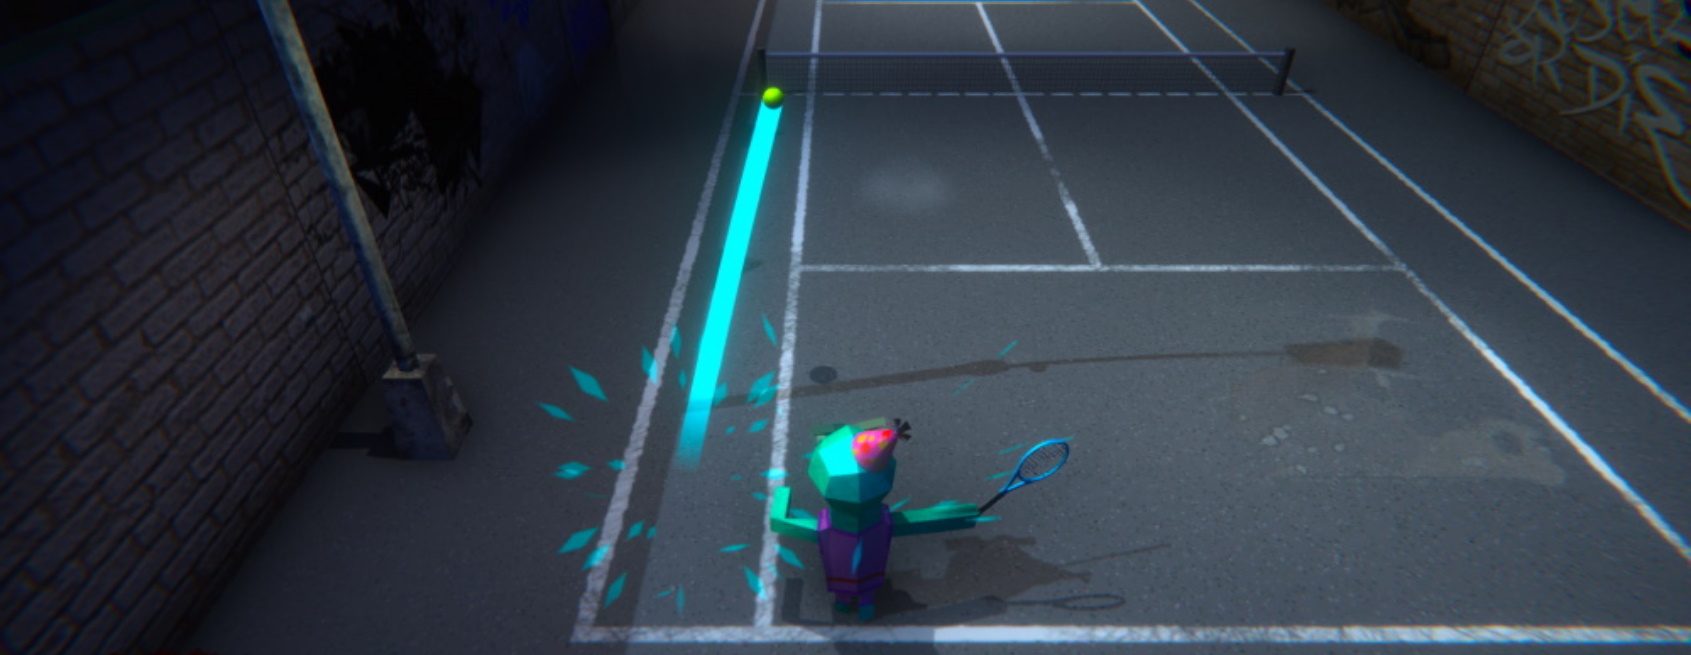 Tennis Street - Simulating tennis (#2): Targeting the ball